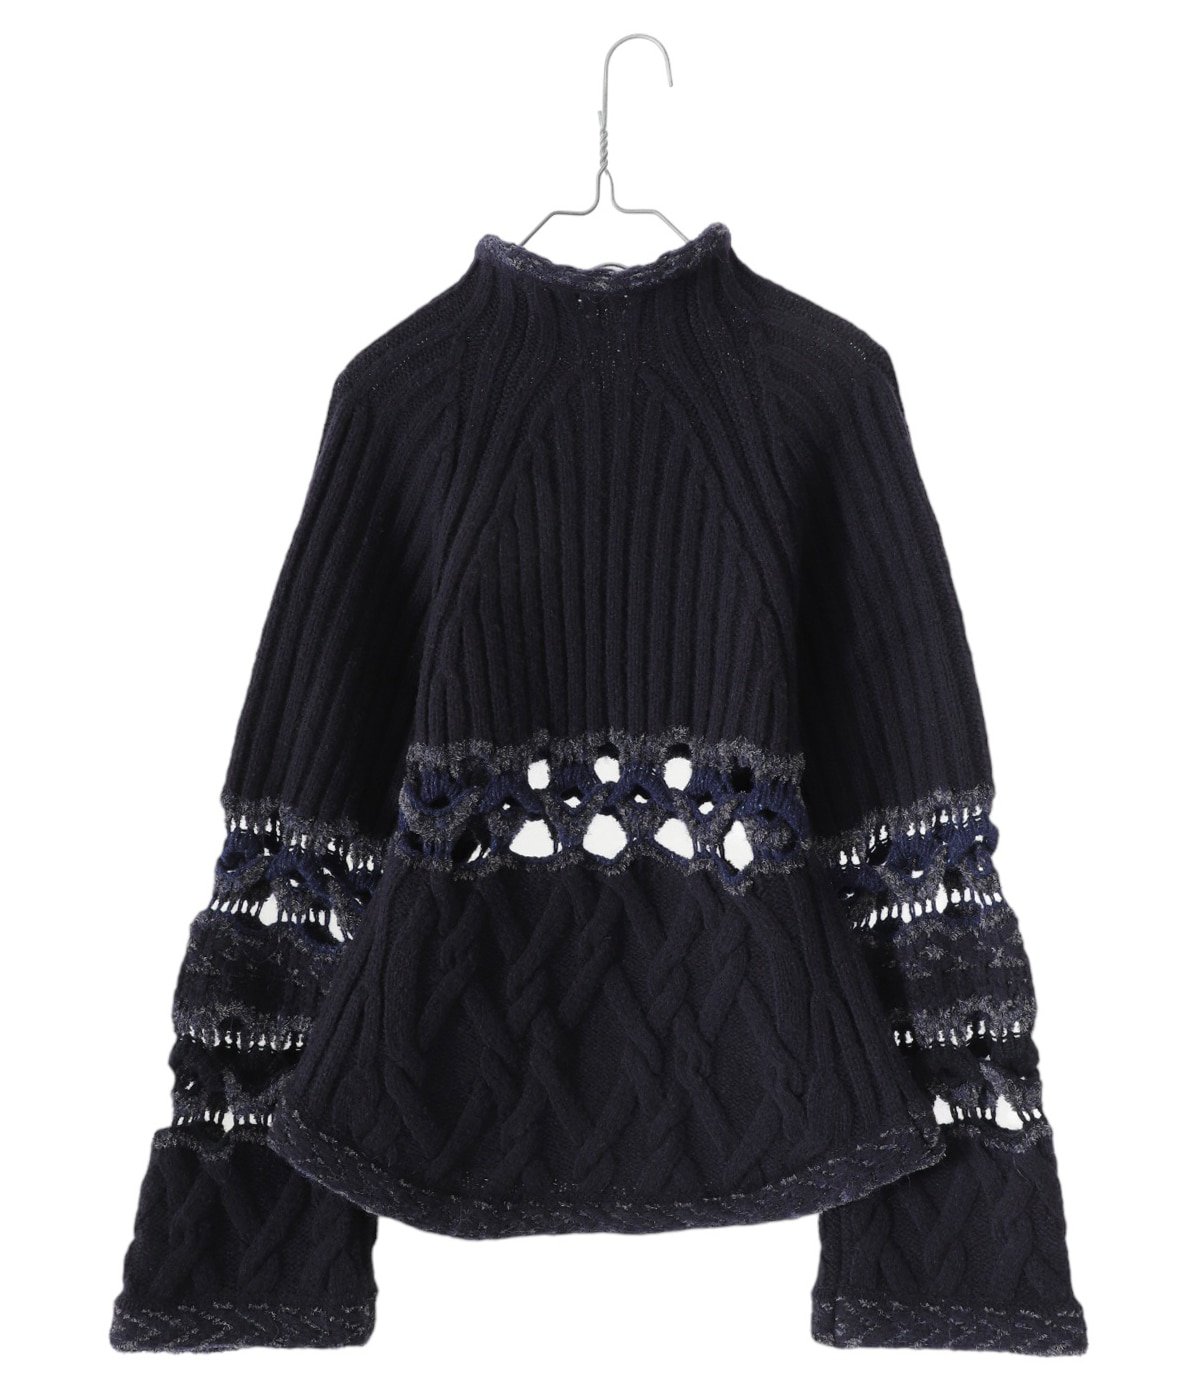 knitted pullover(ikkuna/suzuki takayuki)